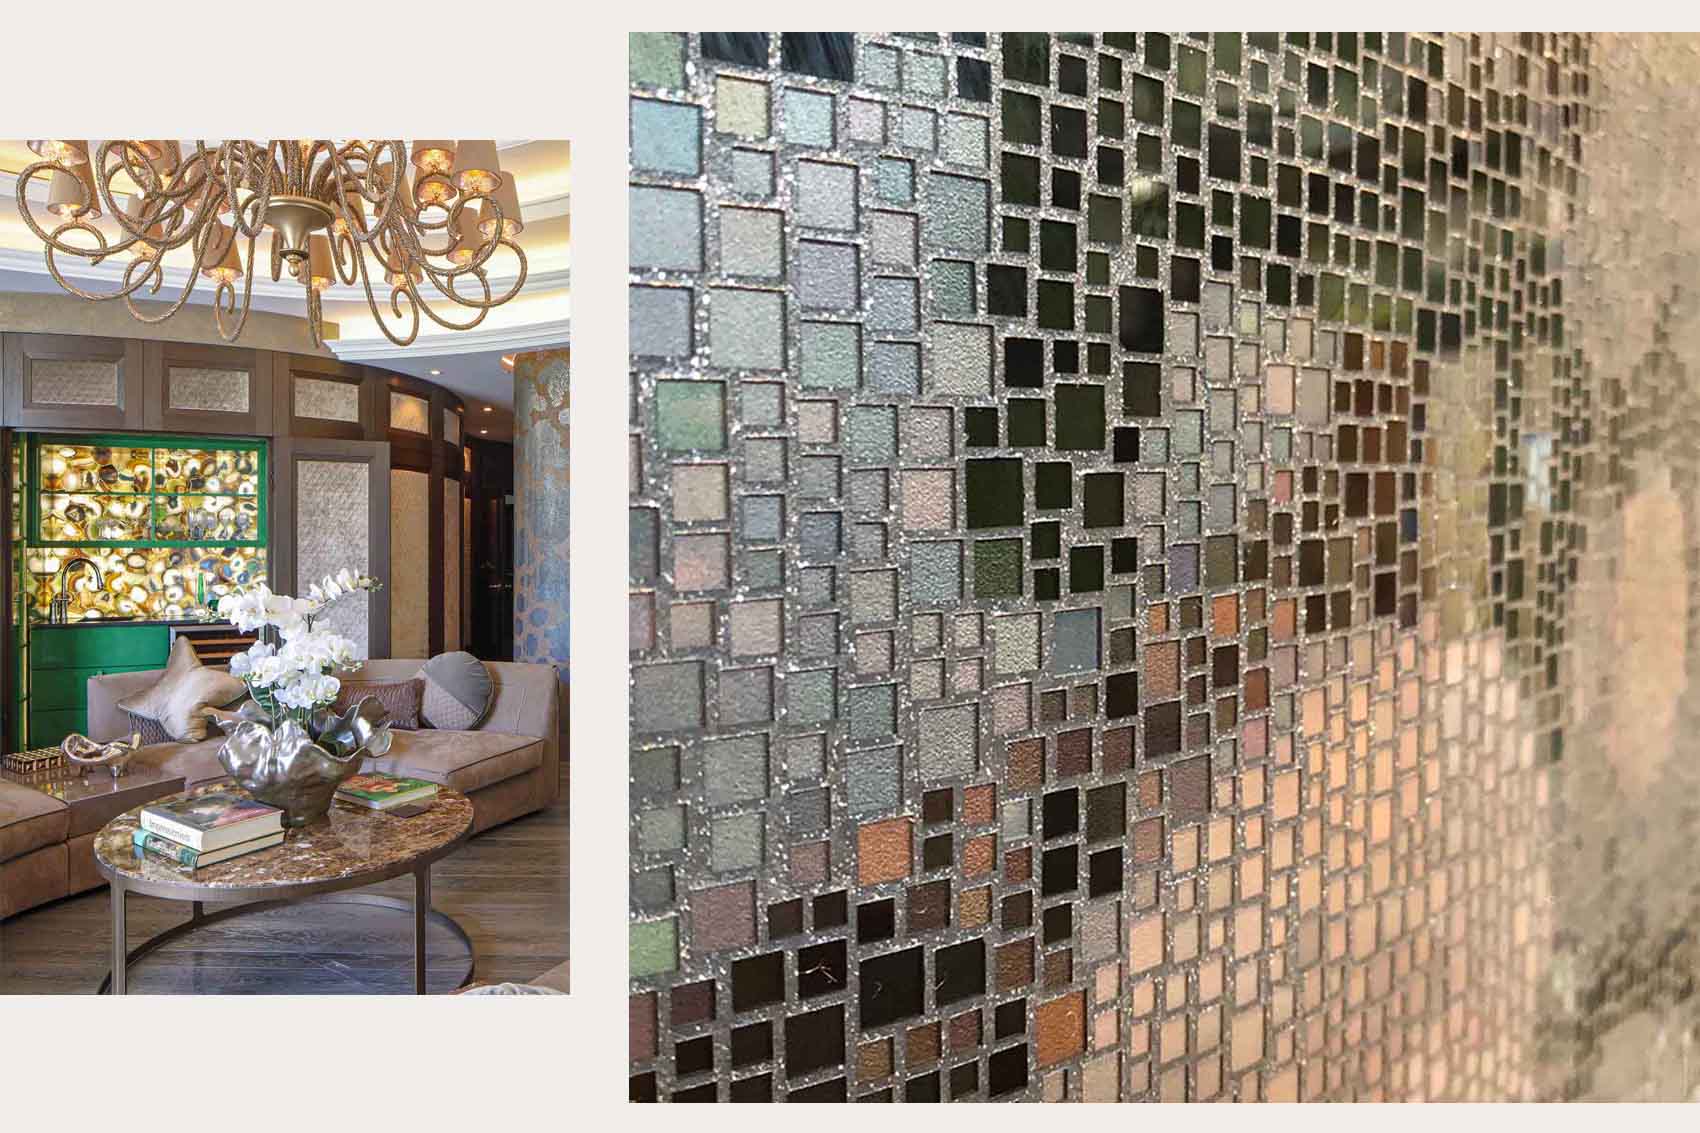 Glitter grout, bespoke design mosaic fire place wall, Murano chandelier, backlit stone wall